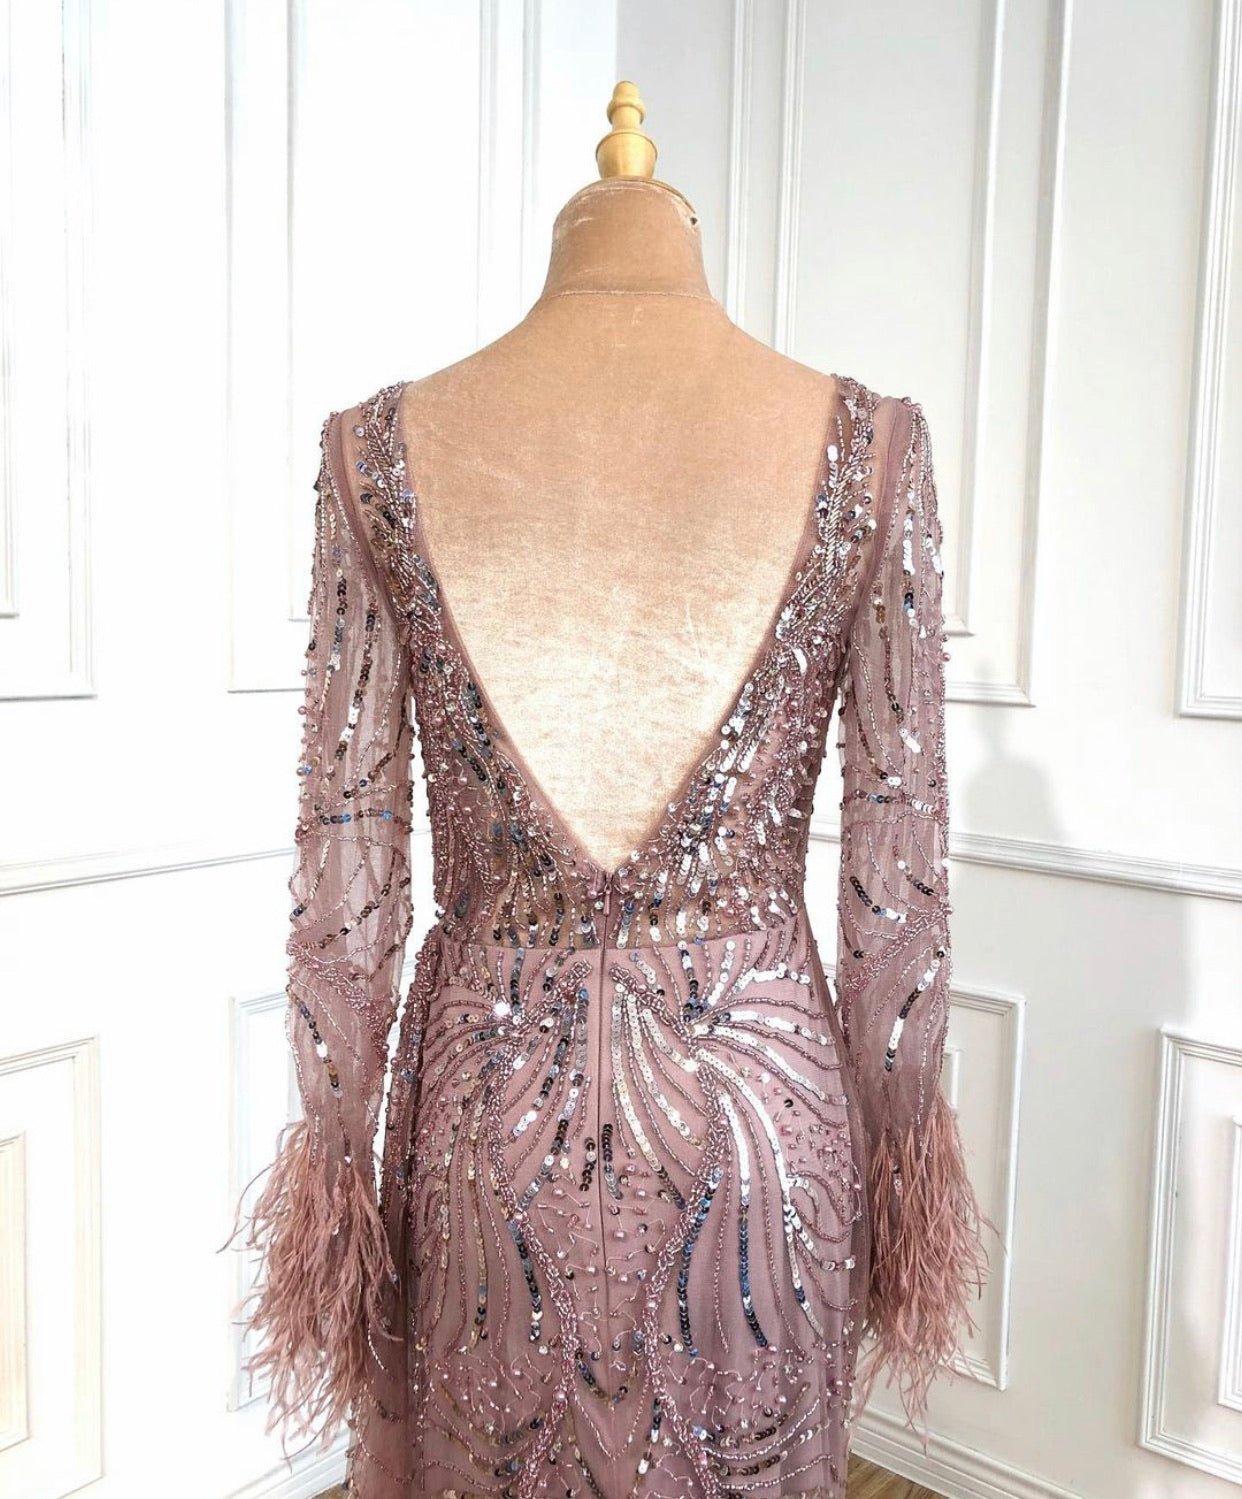 Manha Sequined Long Sleeves Evening Dress - Mscooco.co.uk